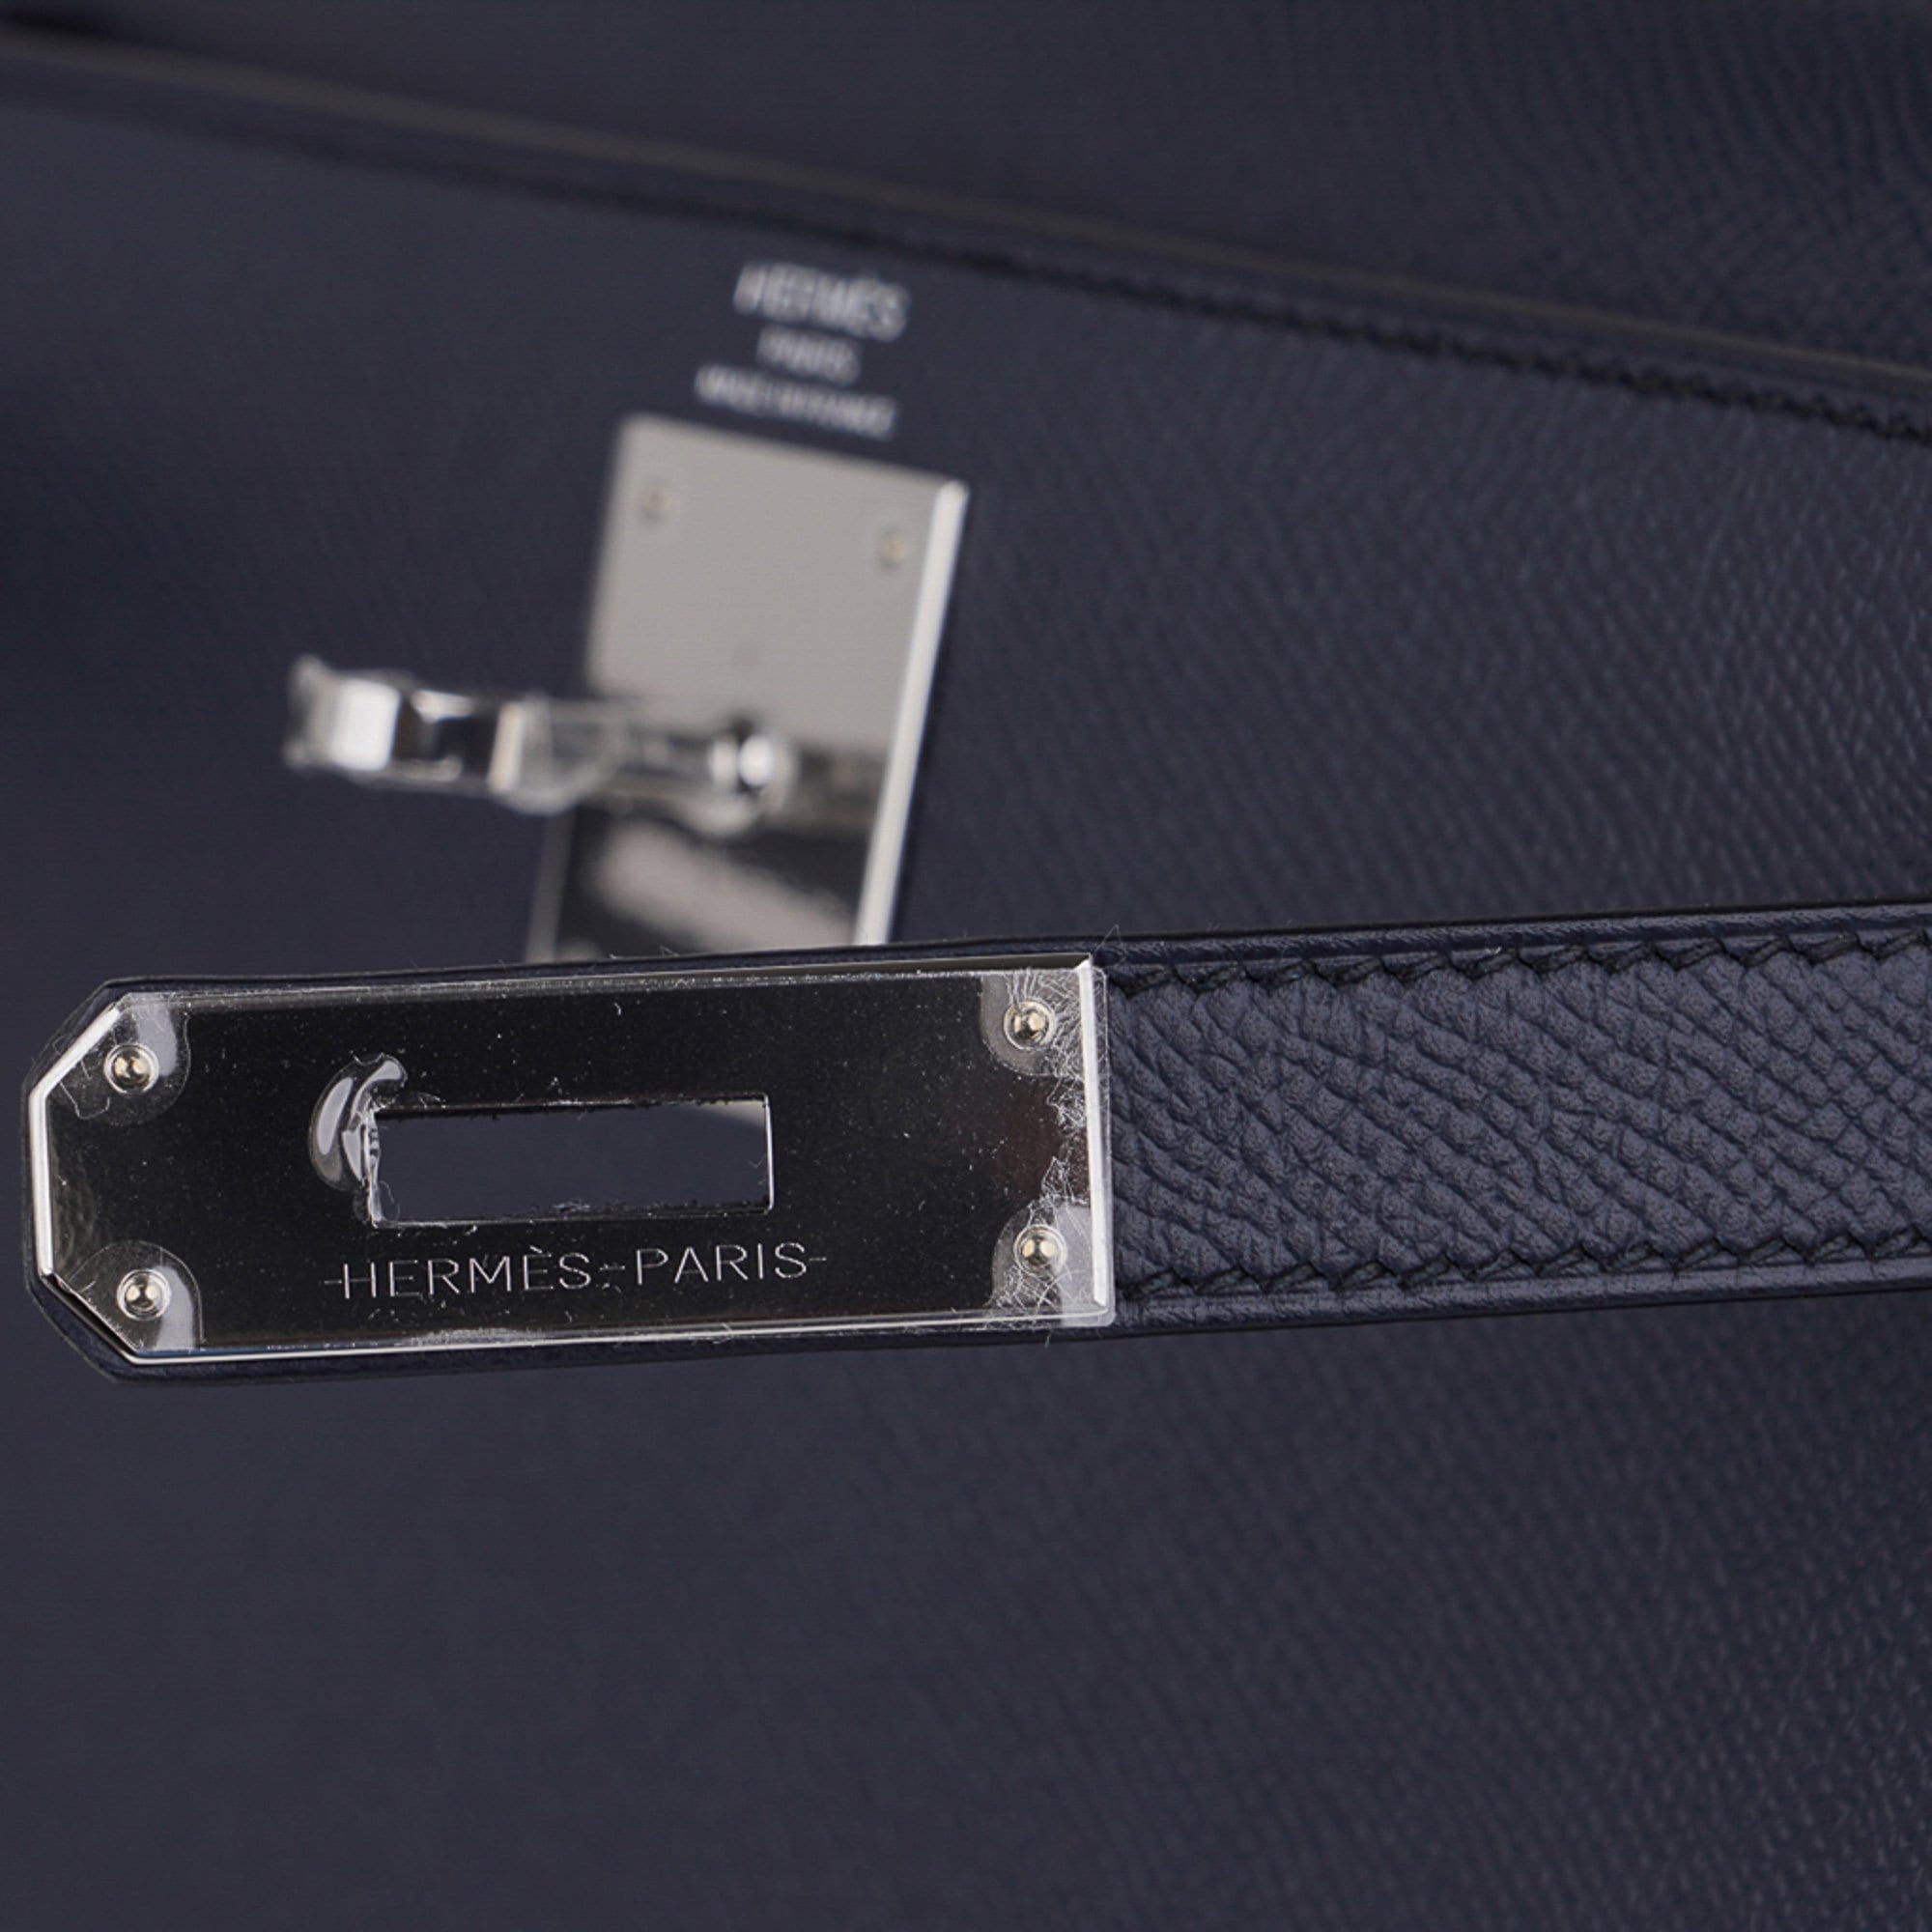 Under The Spotlight: Hermès Birkin Indigo Bi-Color Limited Edition